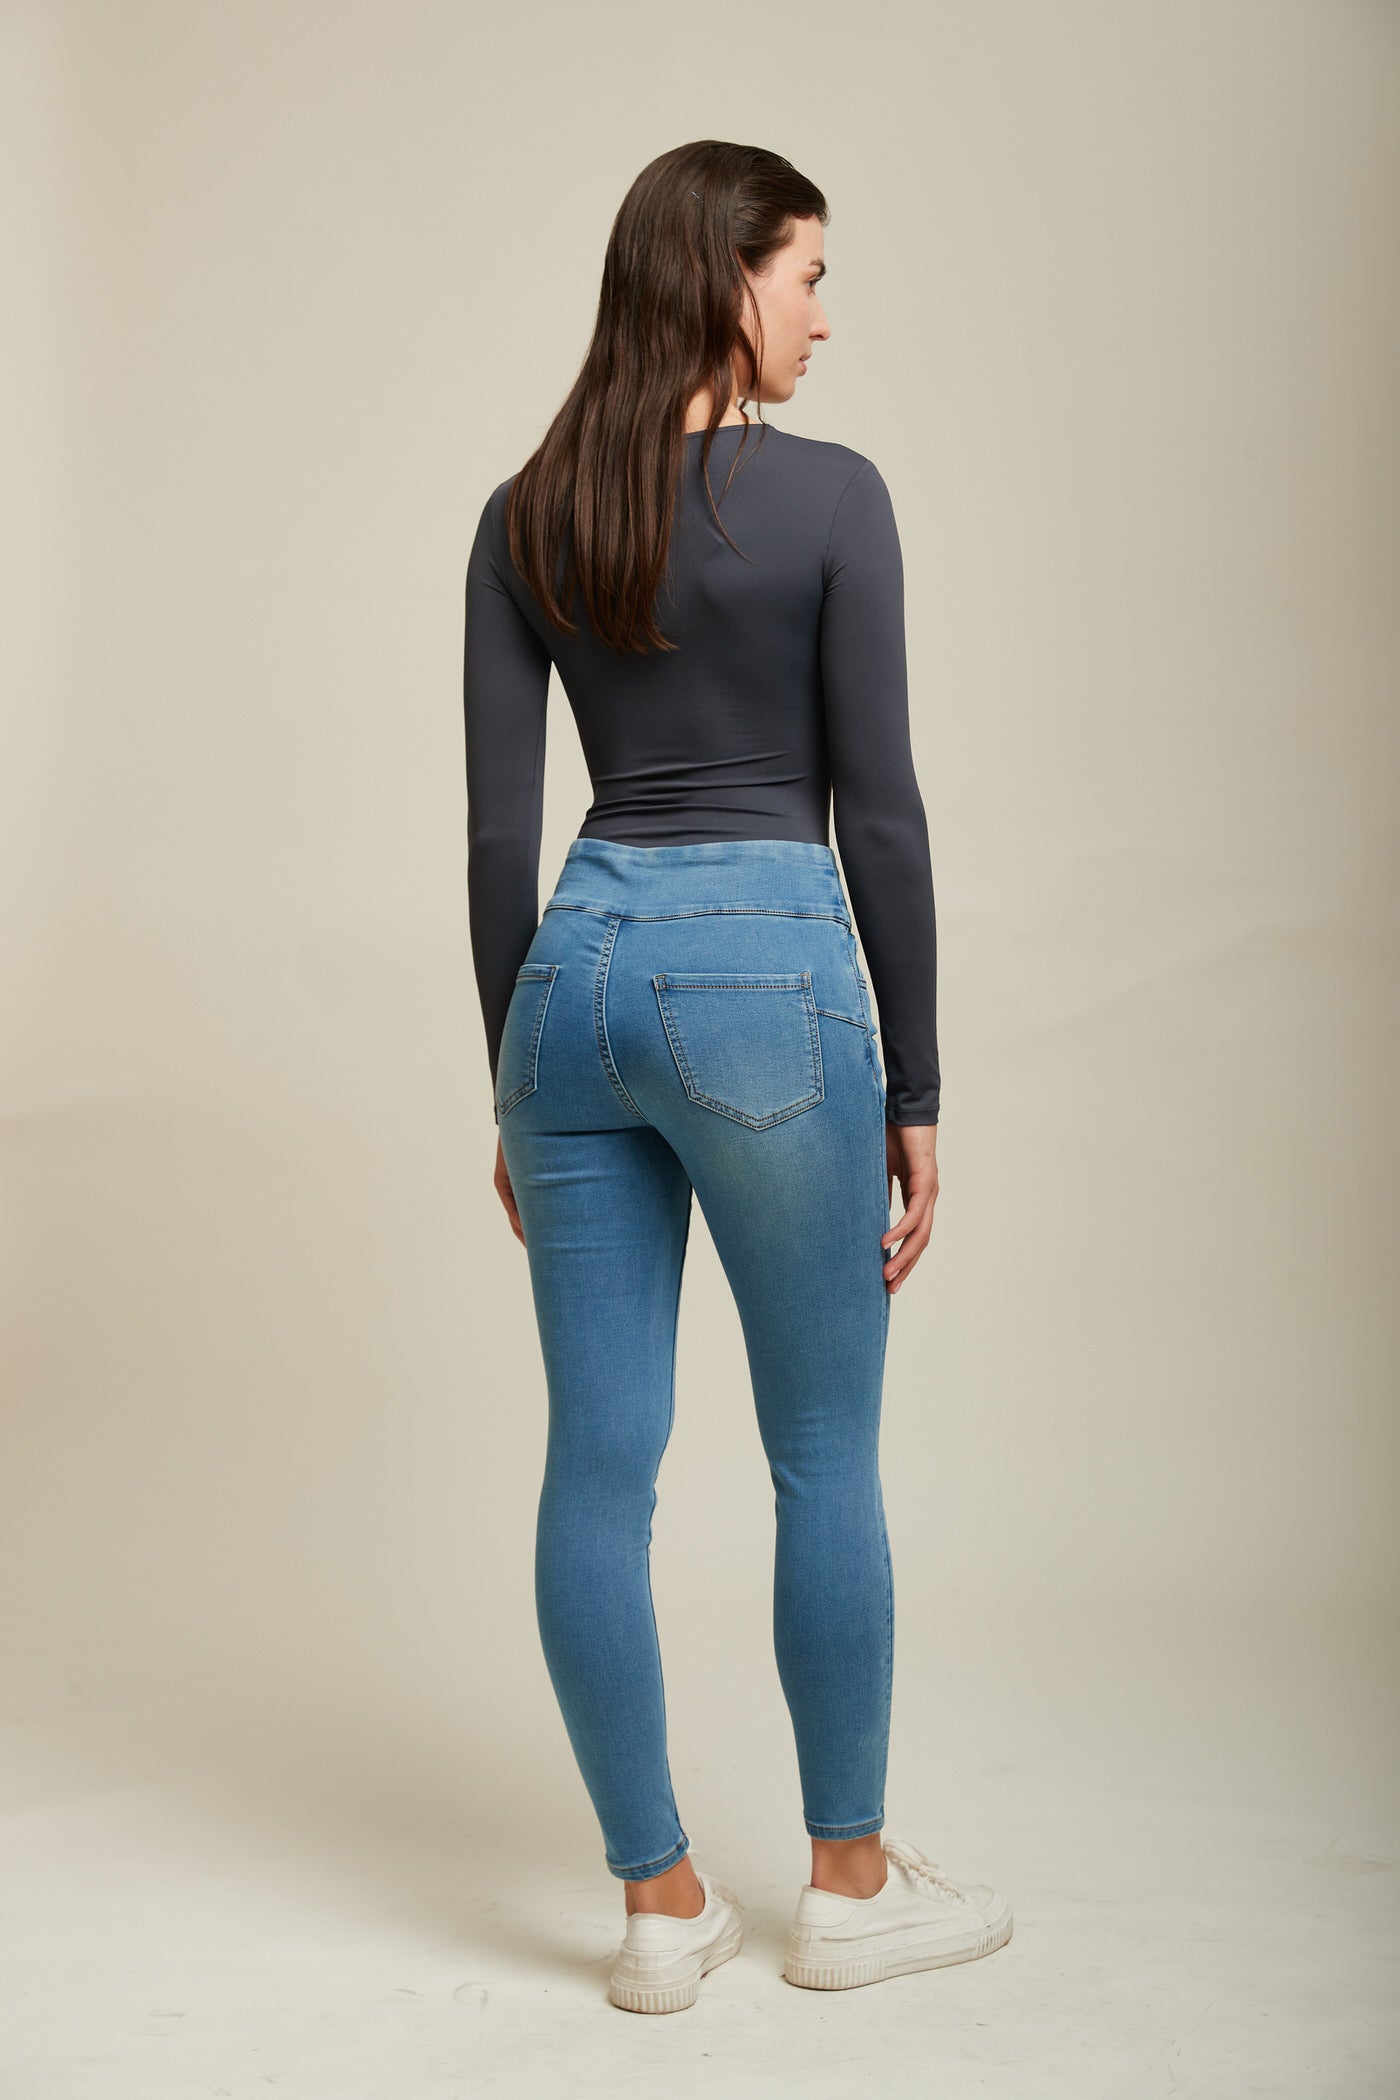 Jogg jean taille haute à enfiler - Sacha by Tocada